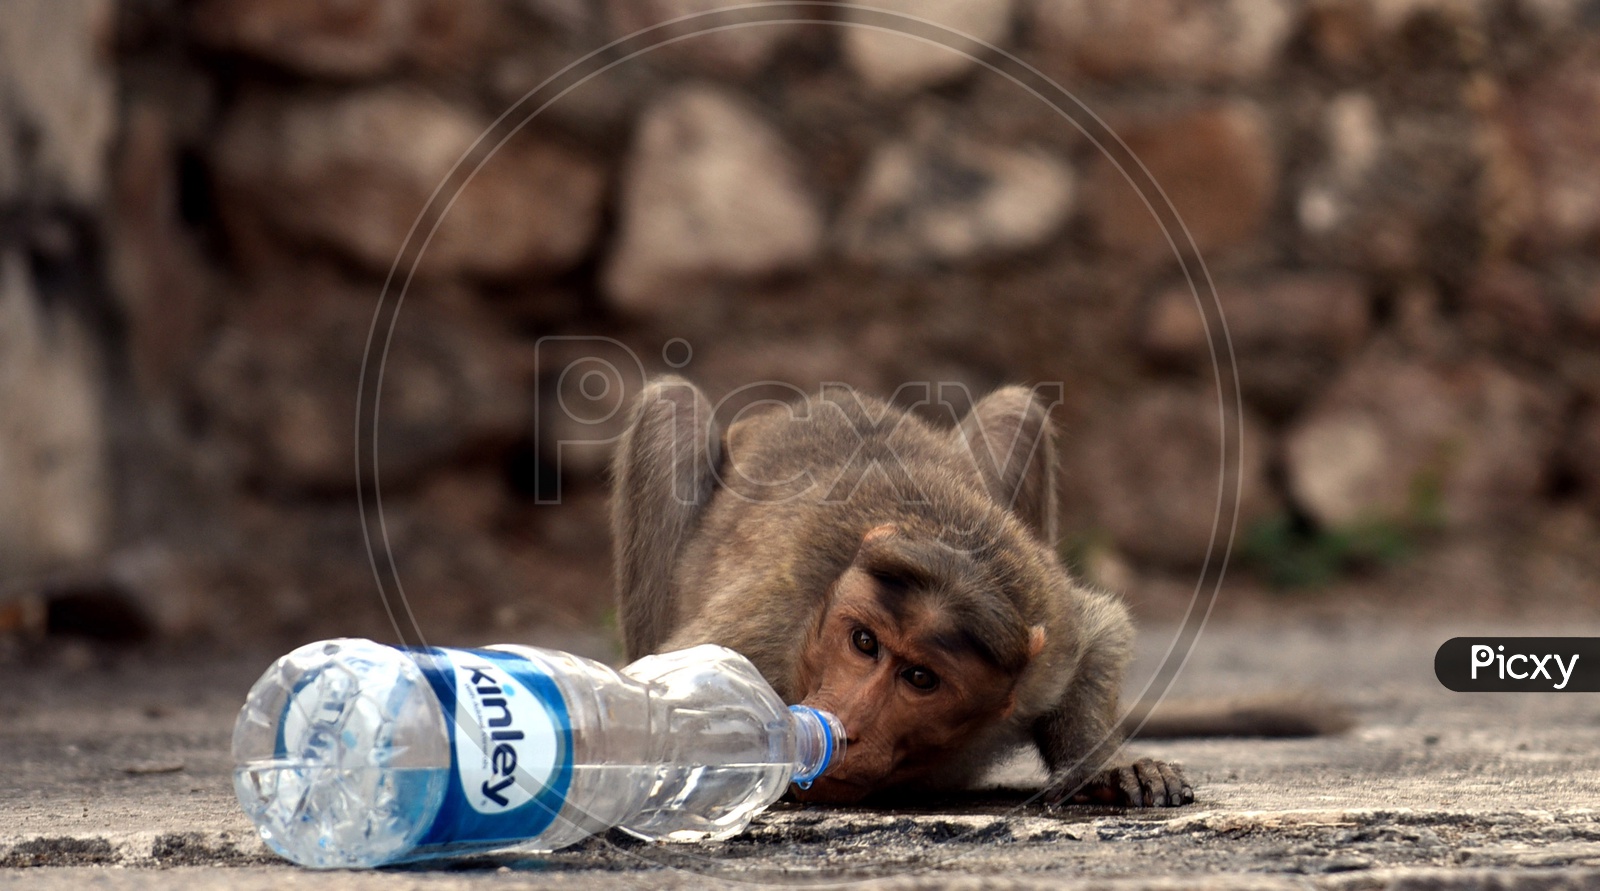 Monkey drinking water from a plastic bottle